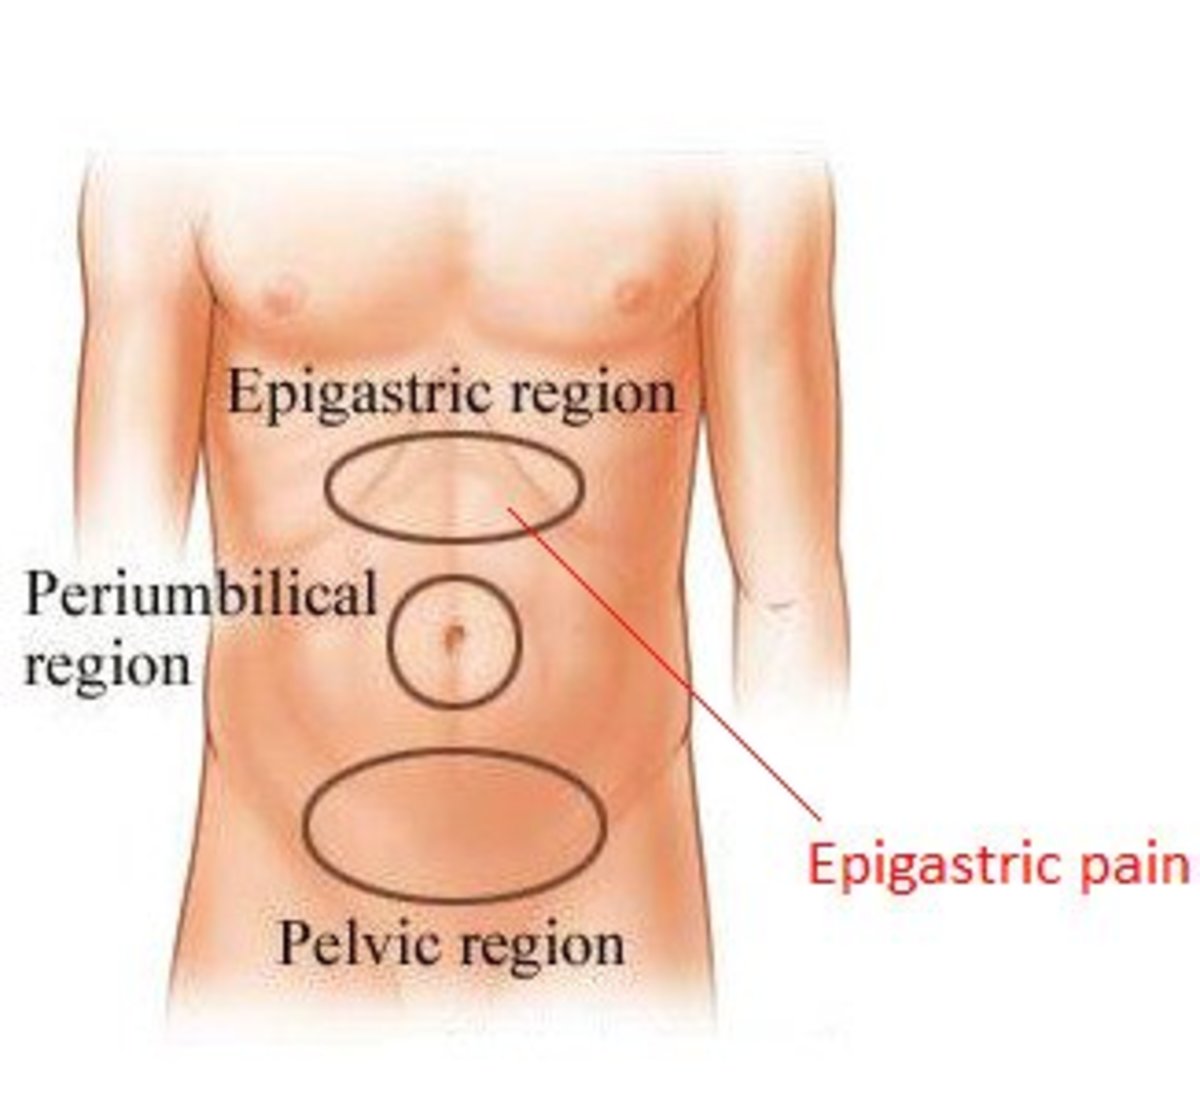 epigastric-pain